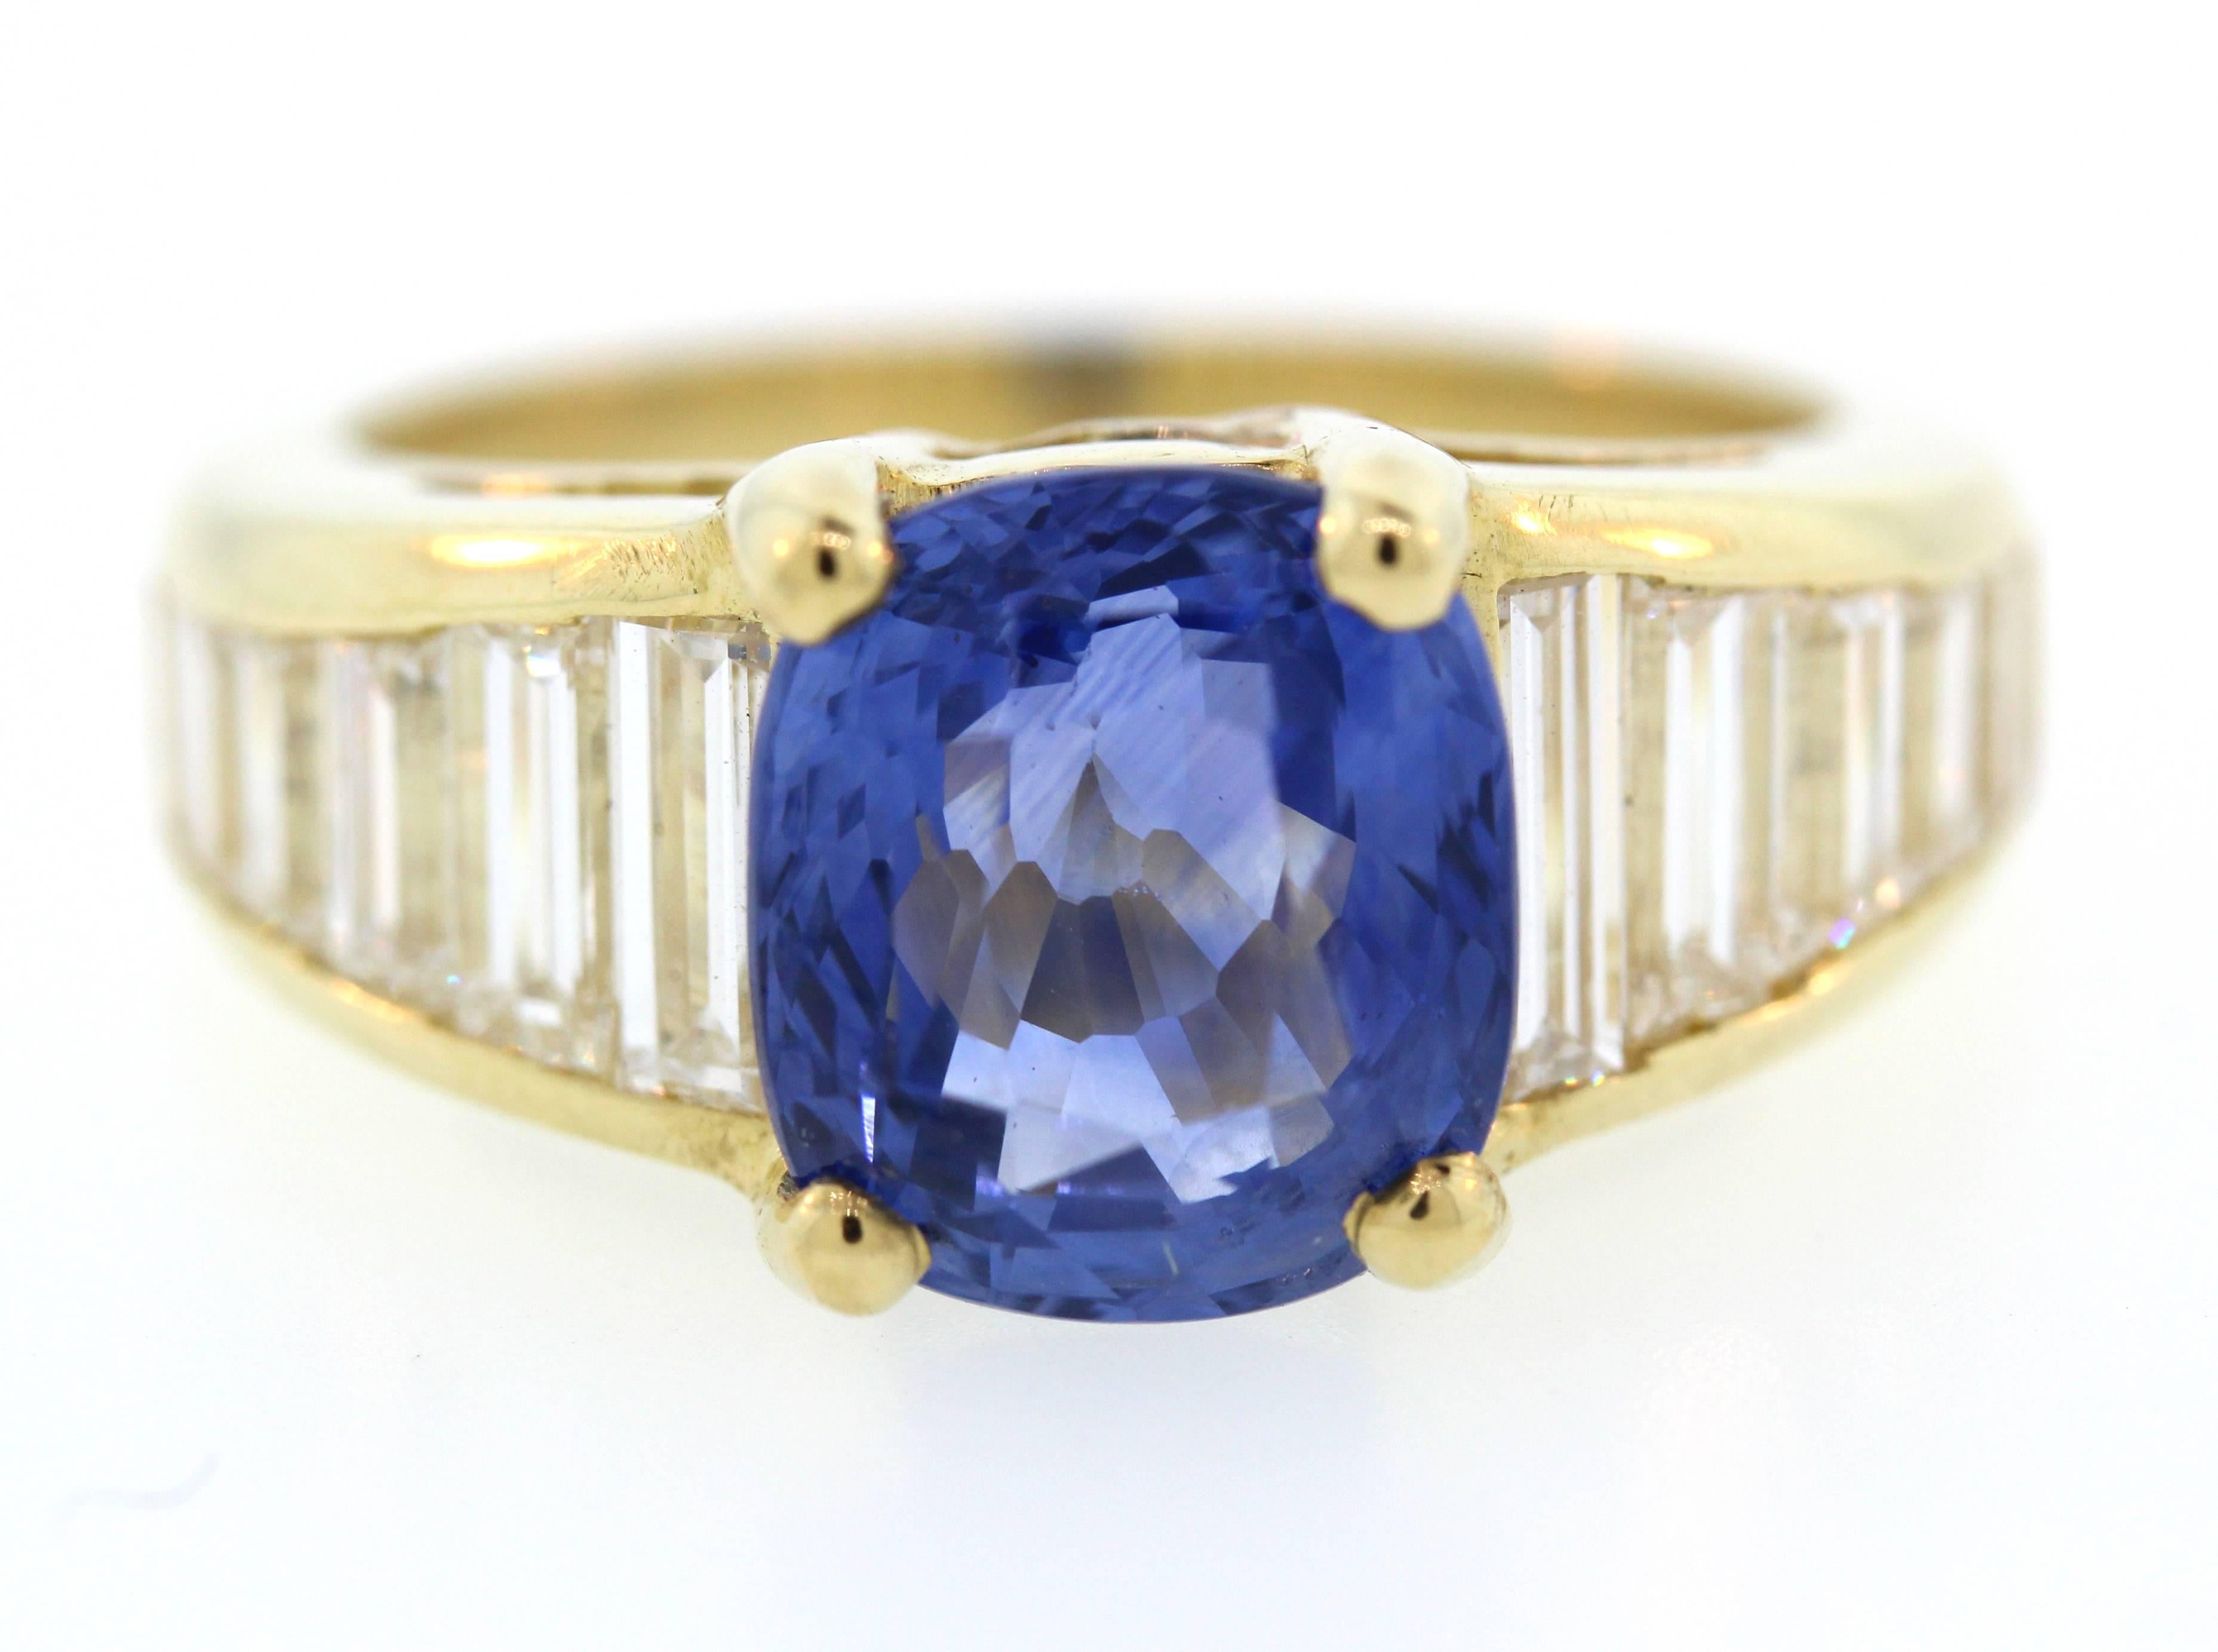 18K Gold Ring with 4.36 Carat AGL Certified Ceylon Blue Sapphire and Baguette Diamonds

Blue Sapphire is 4.36 carat. Cushion Cut. From Ceylon (Sri Lanka). Heat Treatment. 

Certification states: 